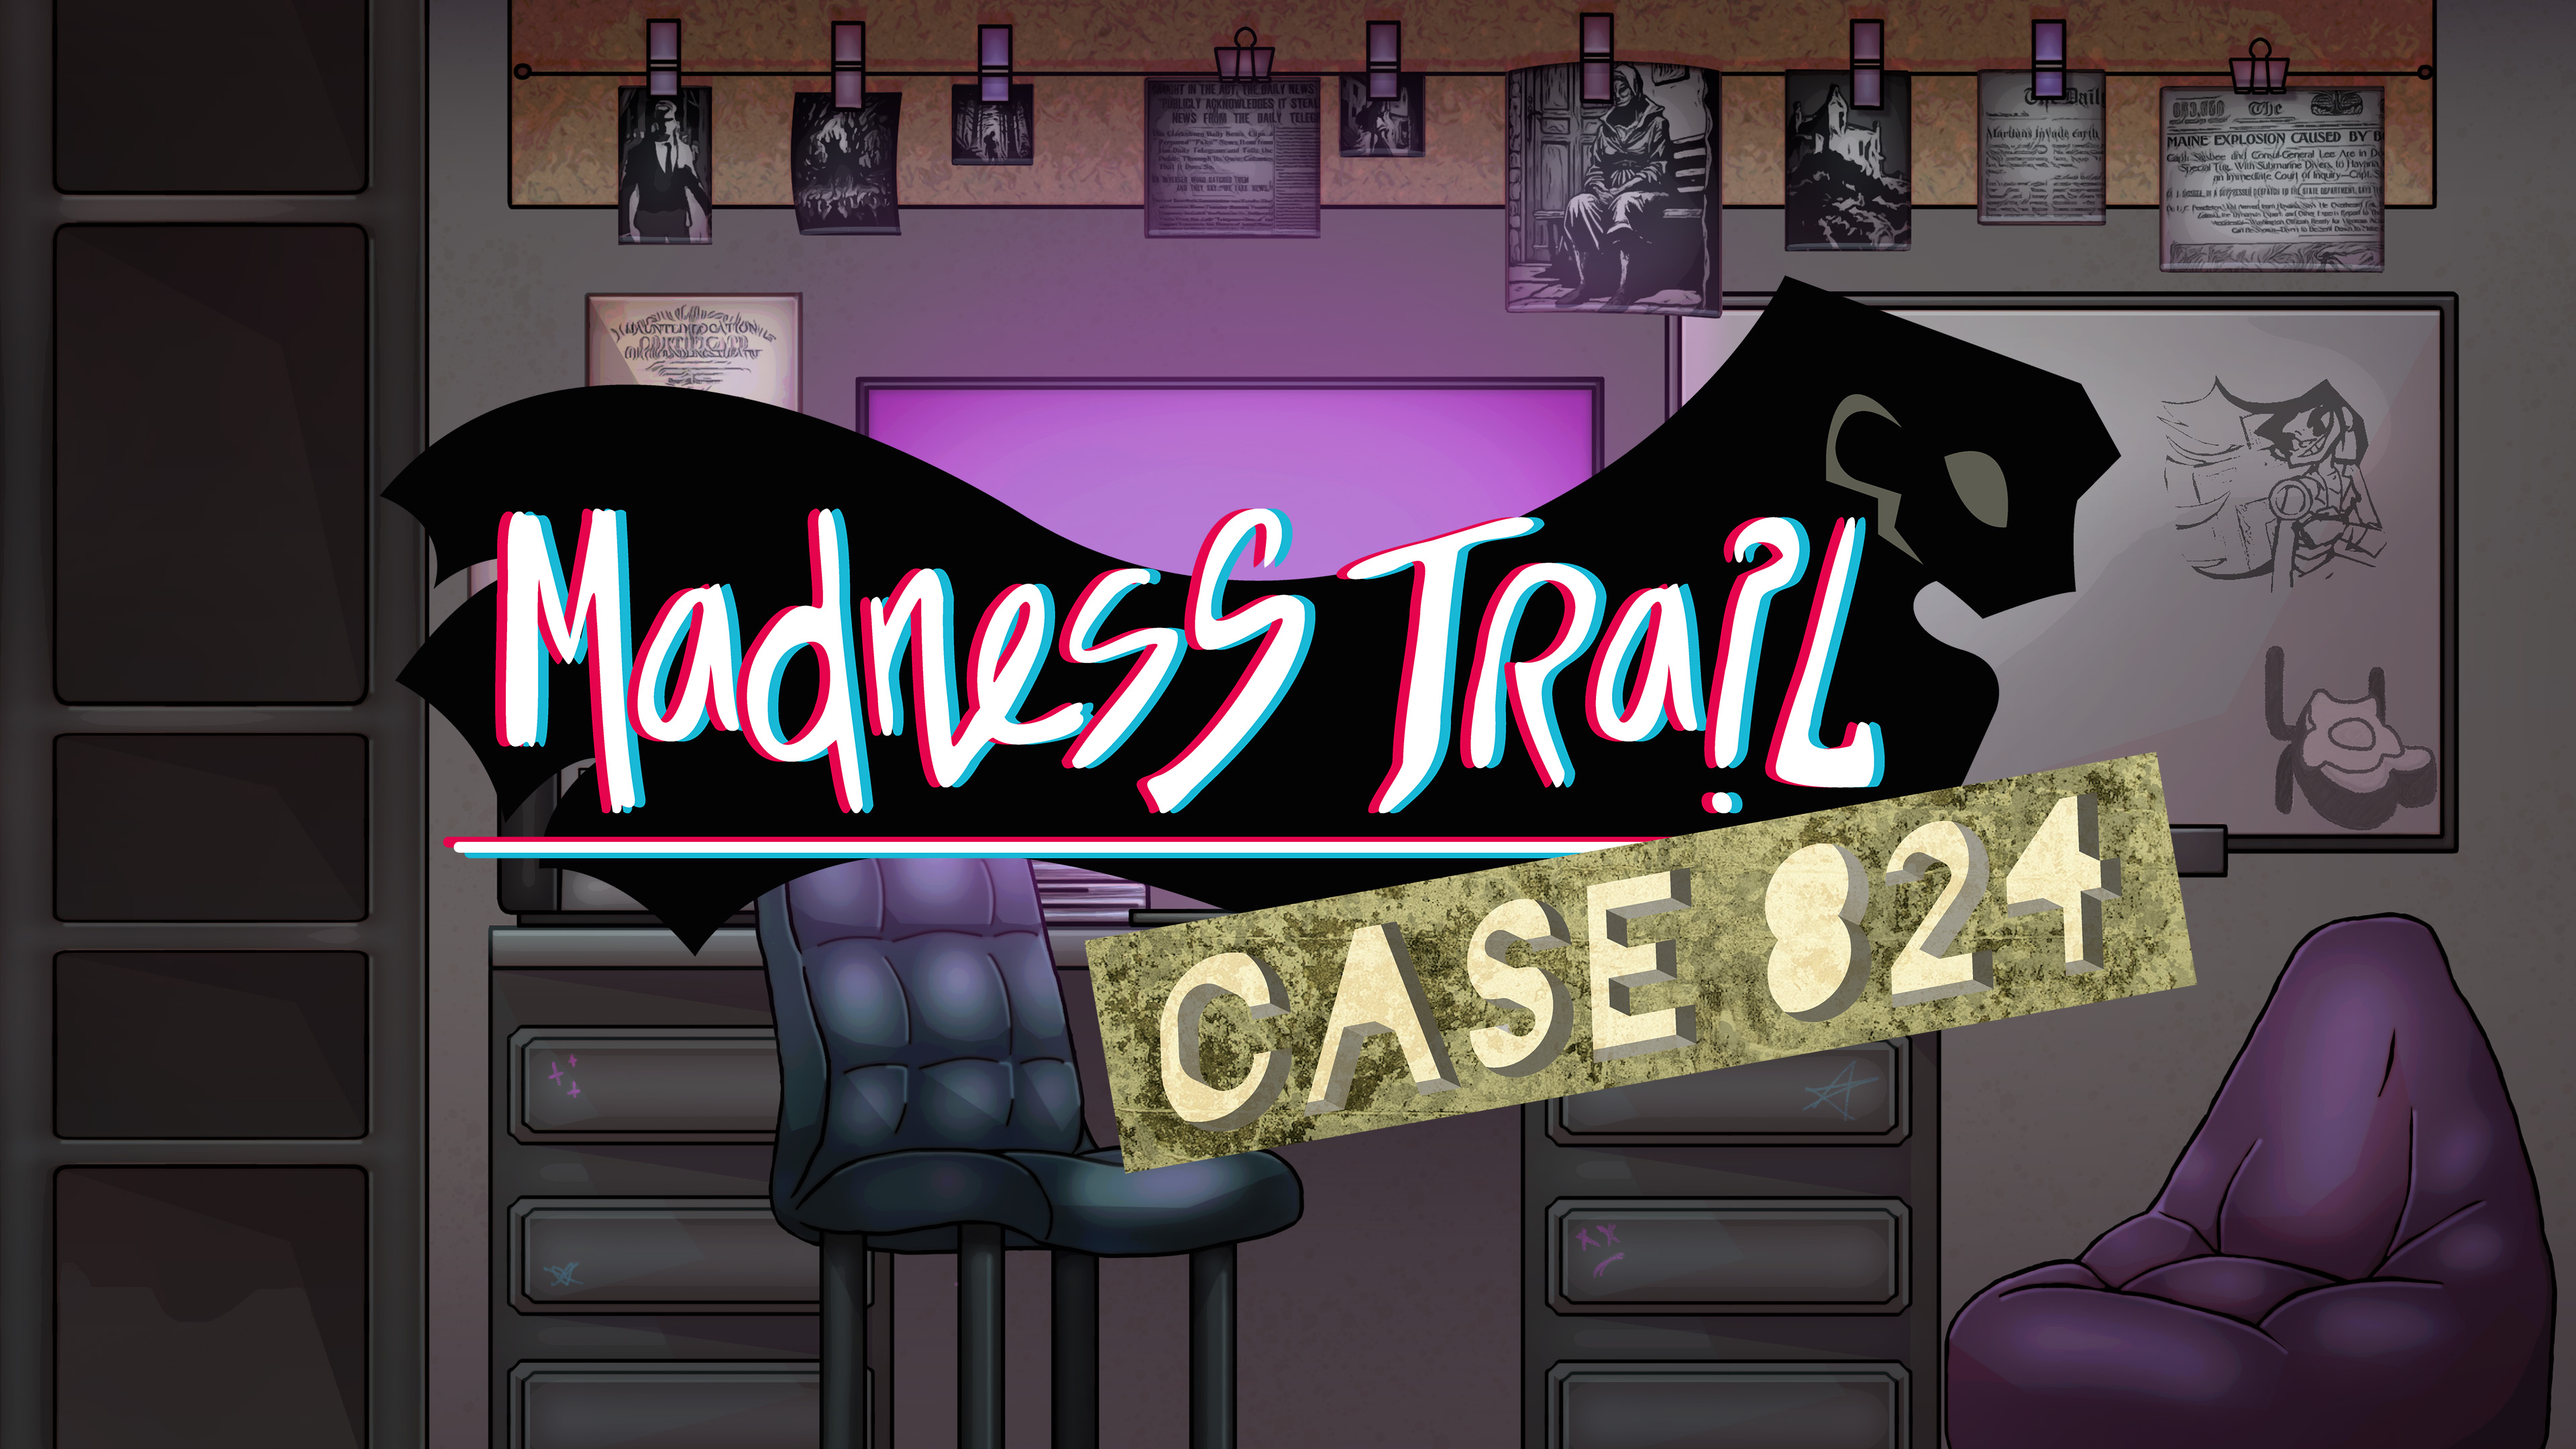 Madness Trail: Case 824